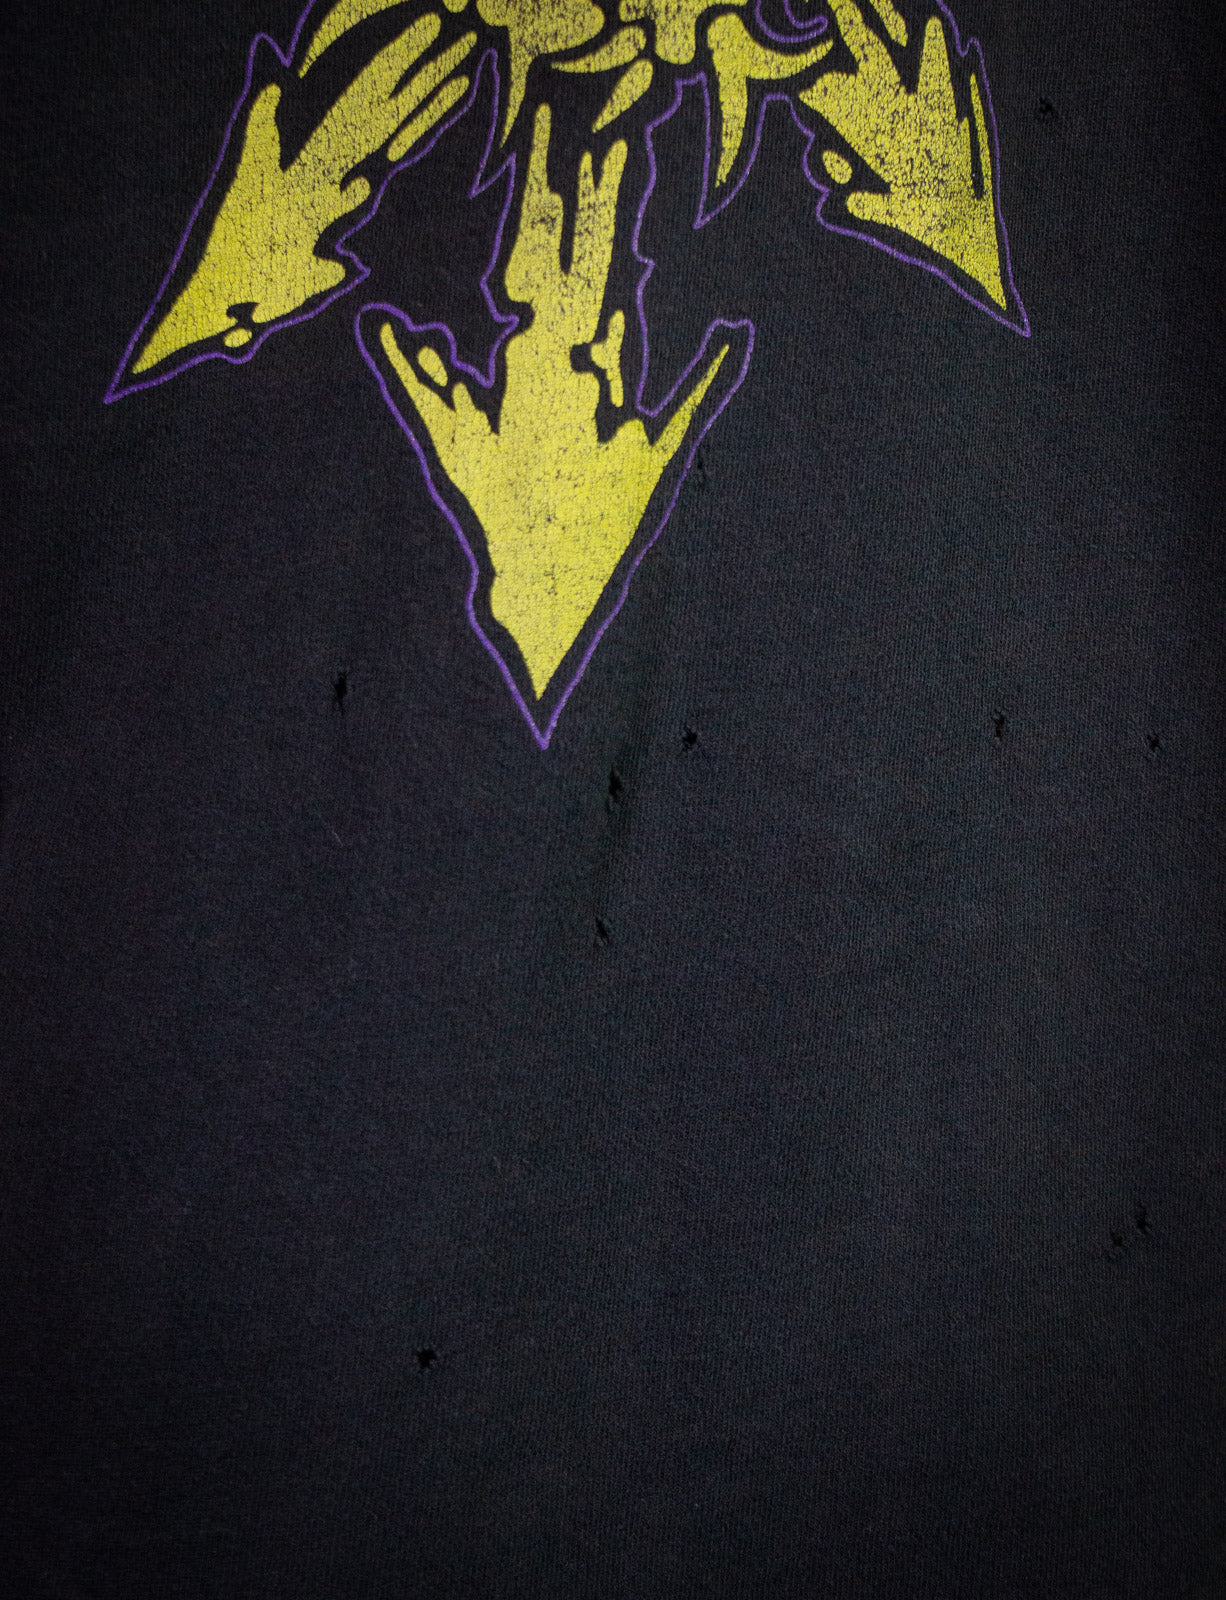 Vintage Sepultura Chaos A.D. Concert T Shirt Long Sleeve 1994 Black Large